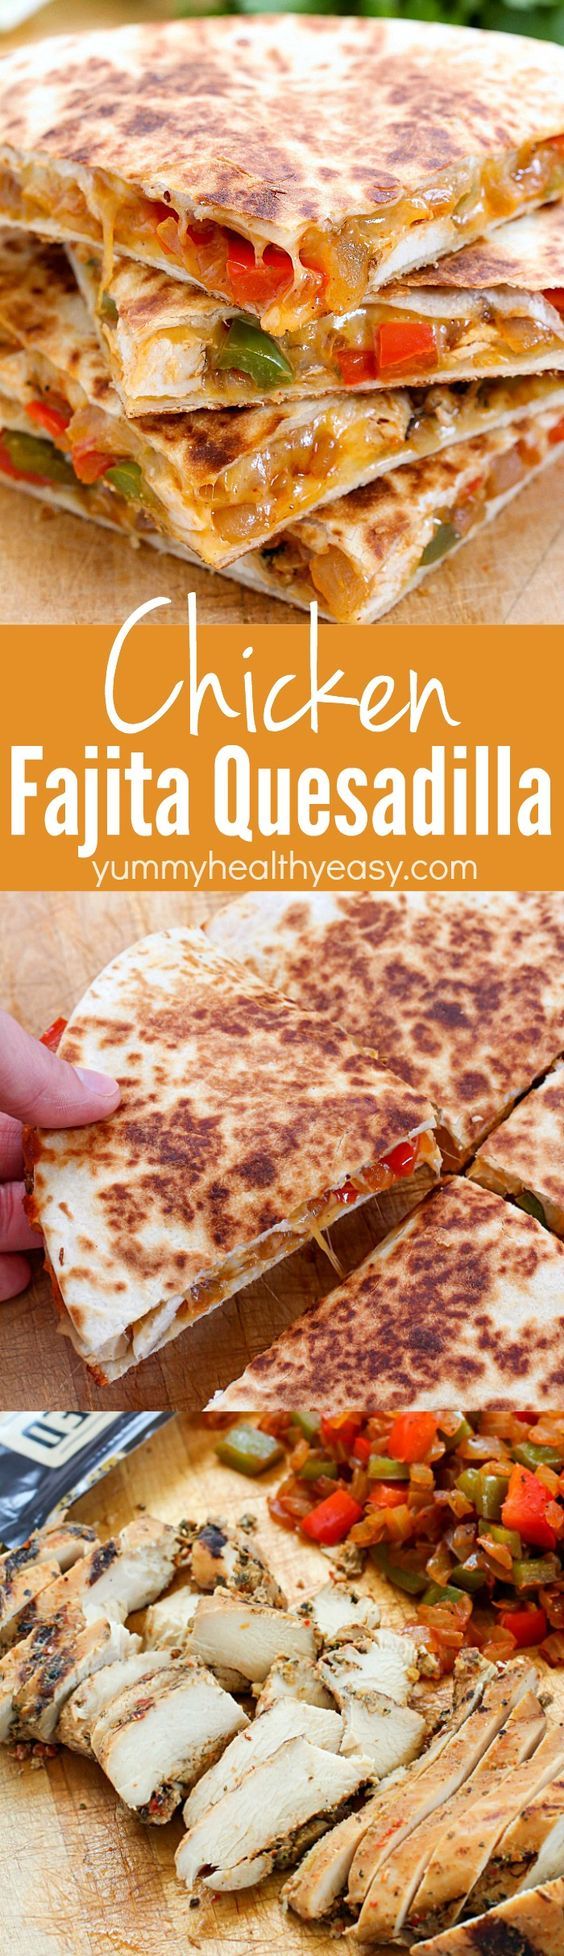 Chicken Fajita Quesadilla